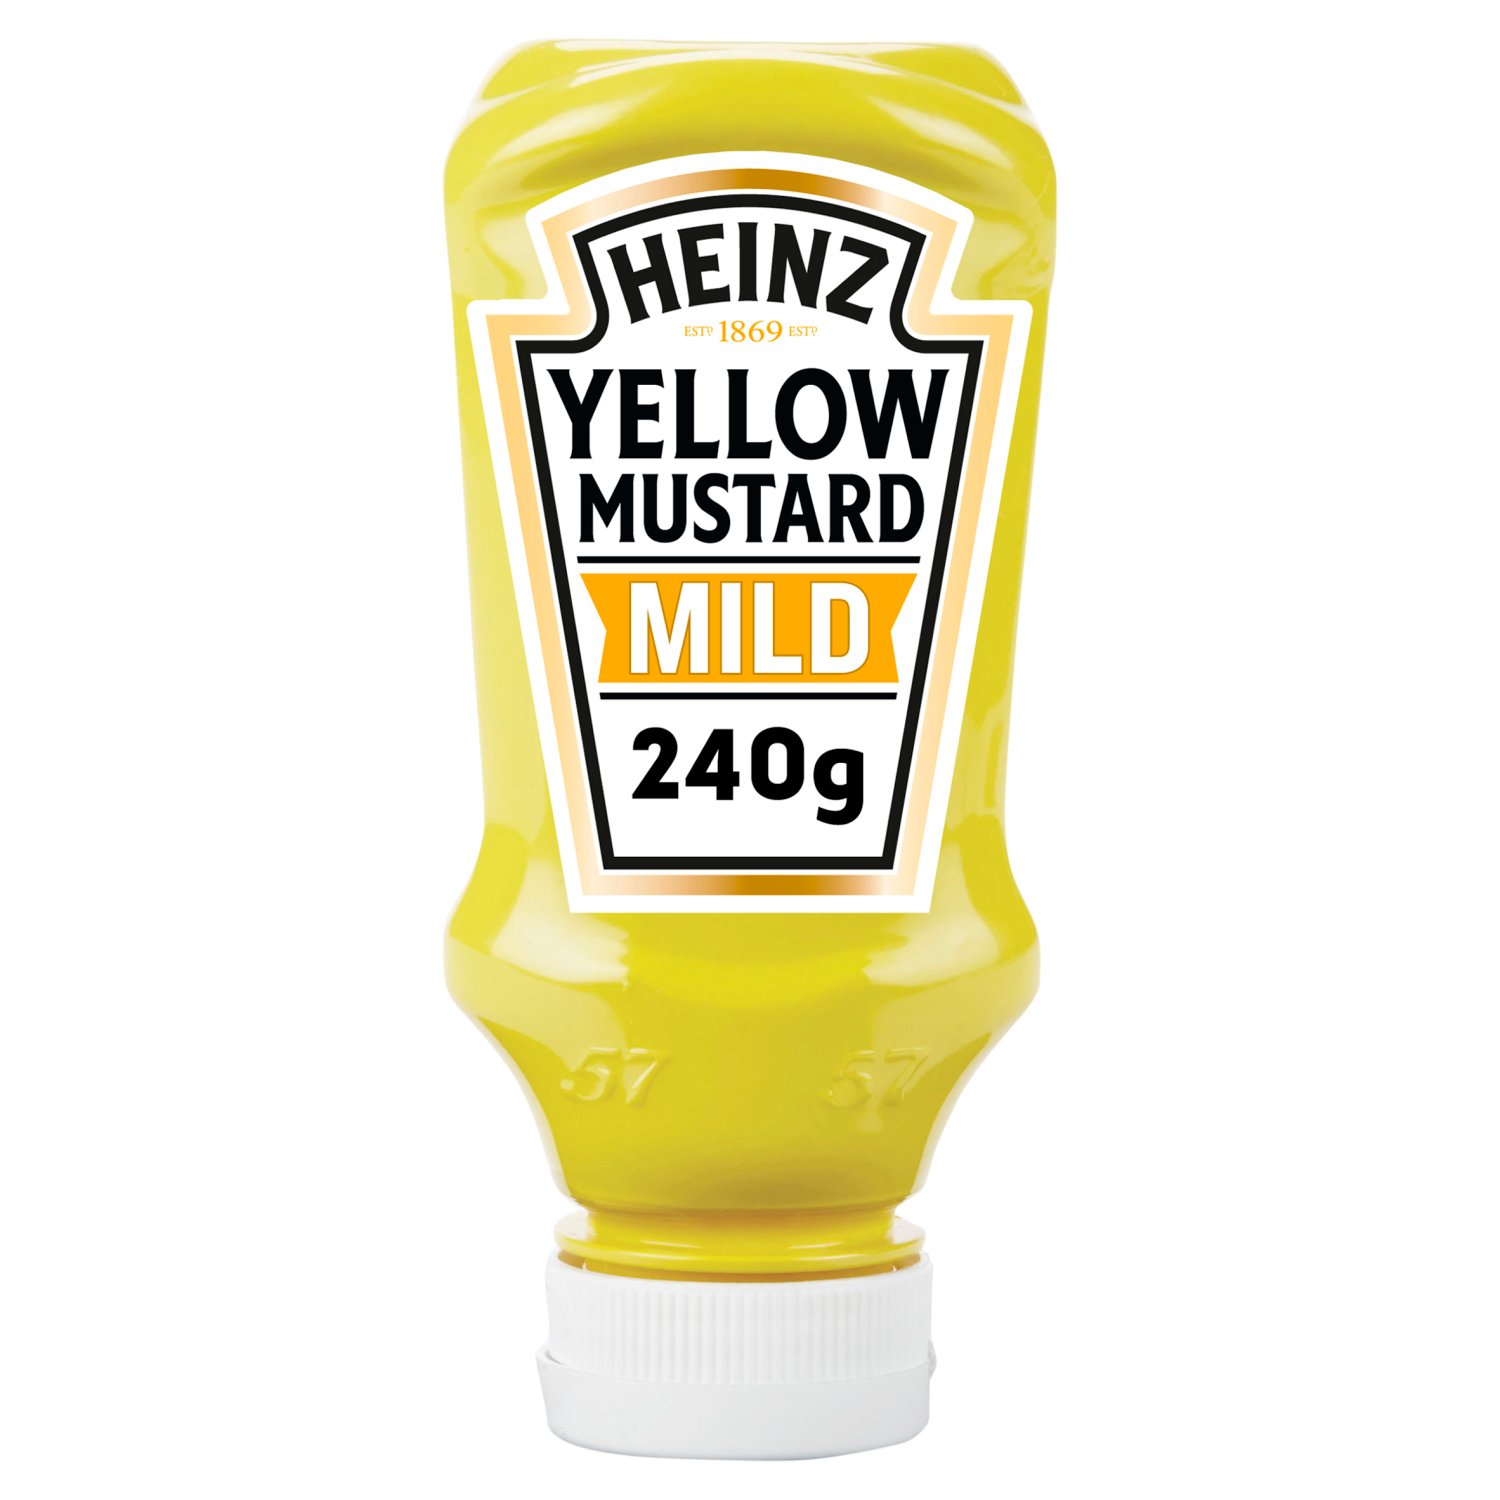 Heinz Yellow Mustard Mild (220 ml)